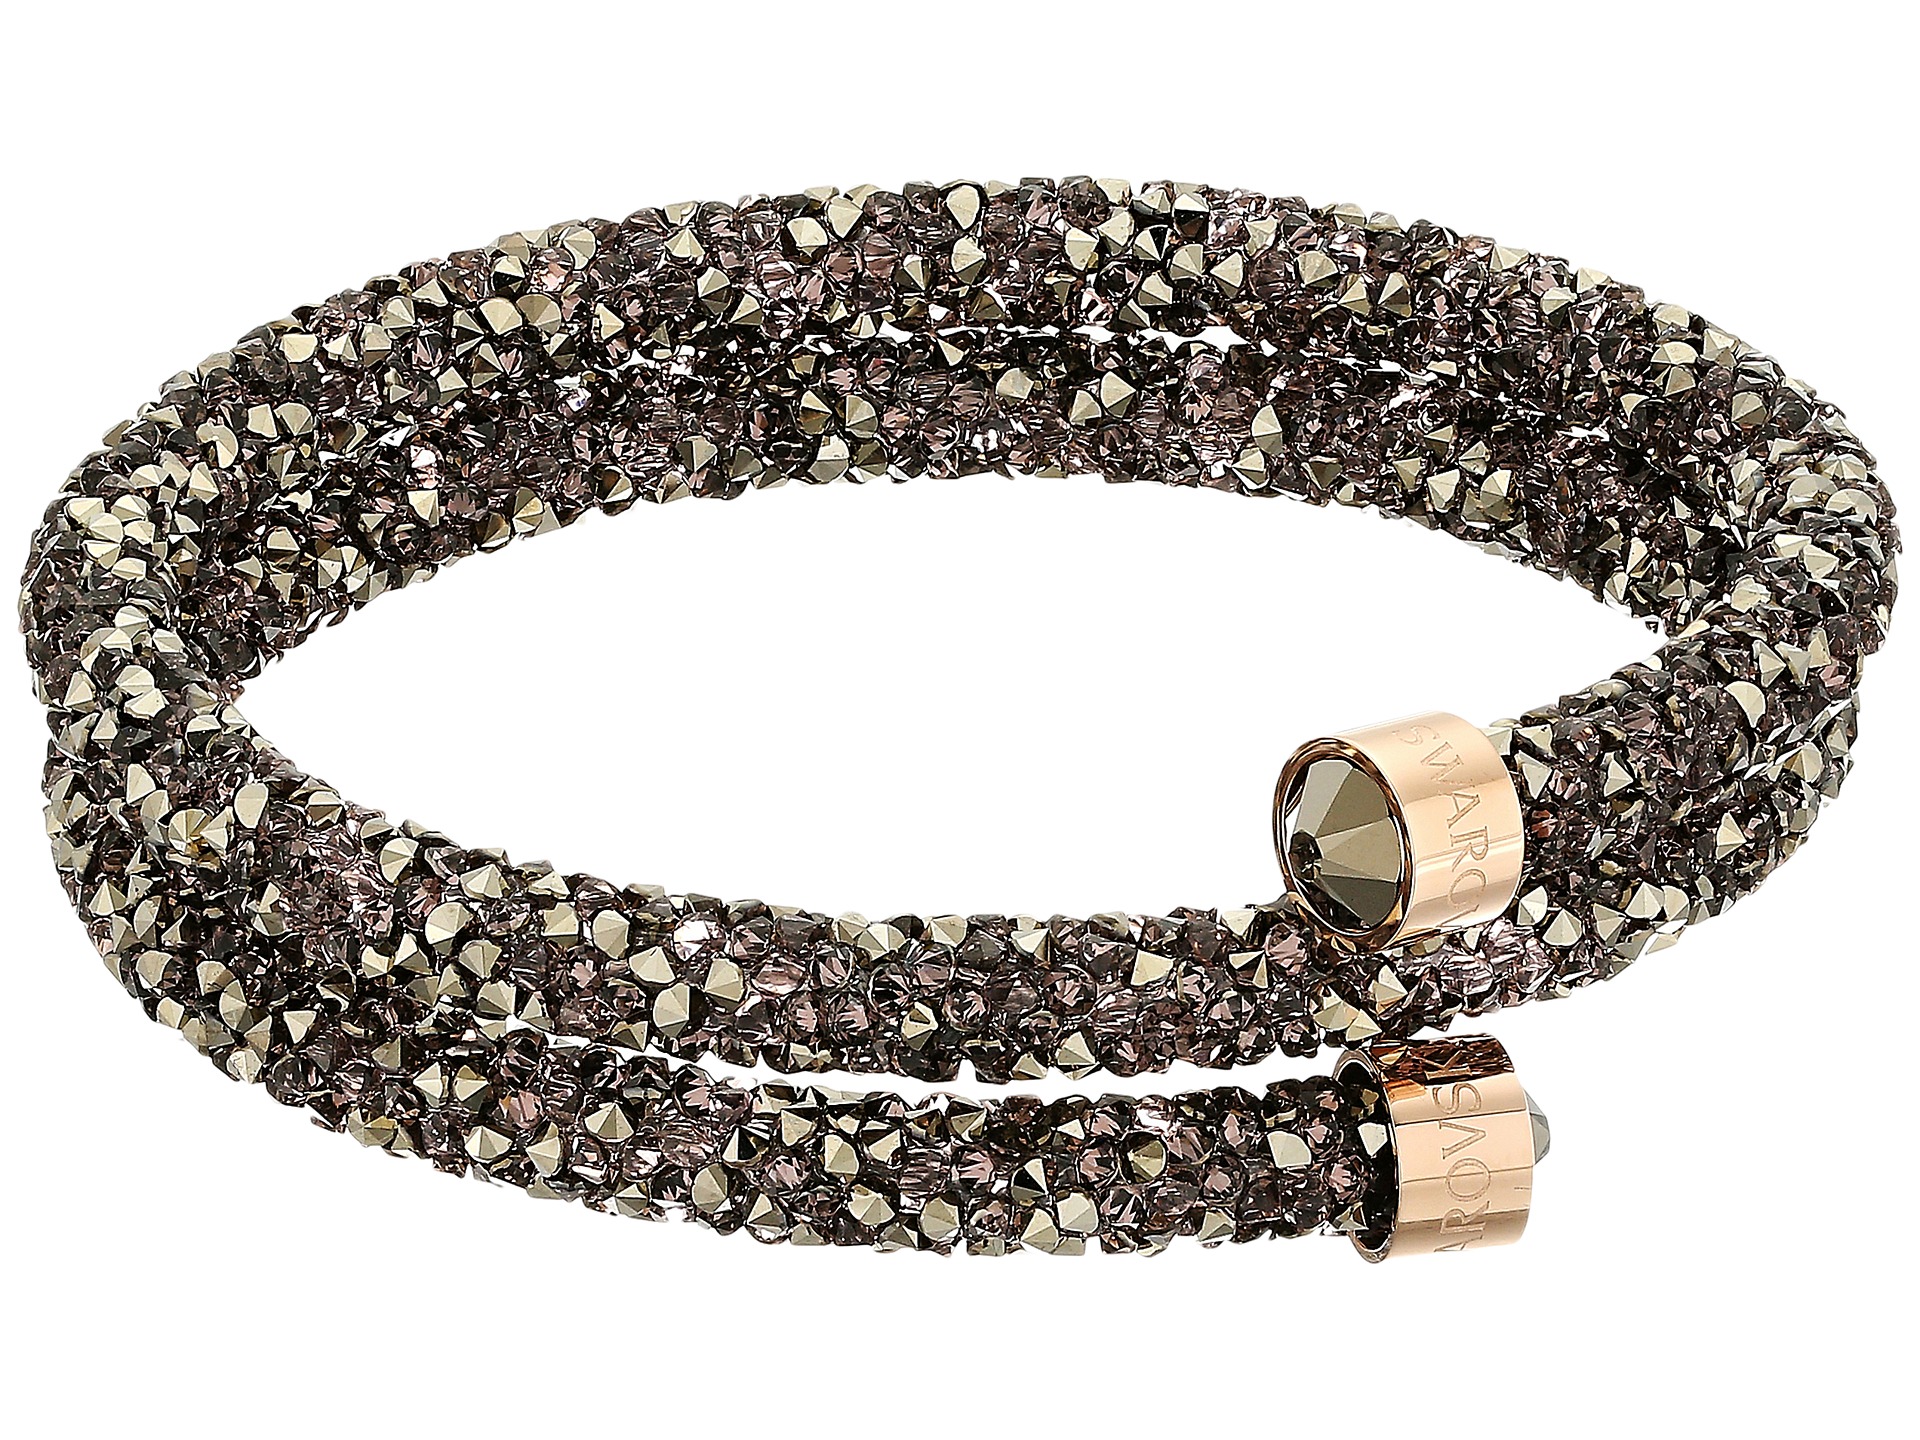 Swarovski Crystaldust Bangle Double Wrap Bracelet at Zappos.com